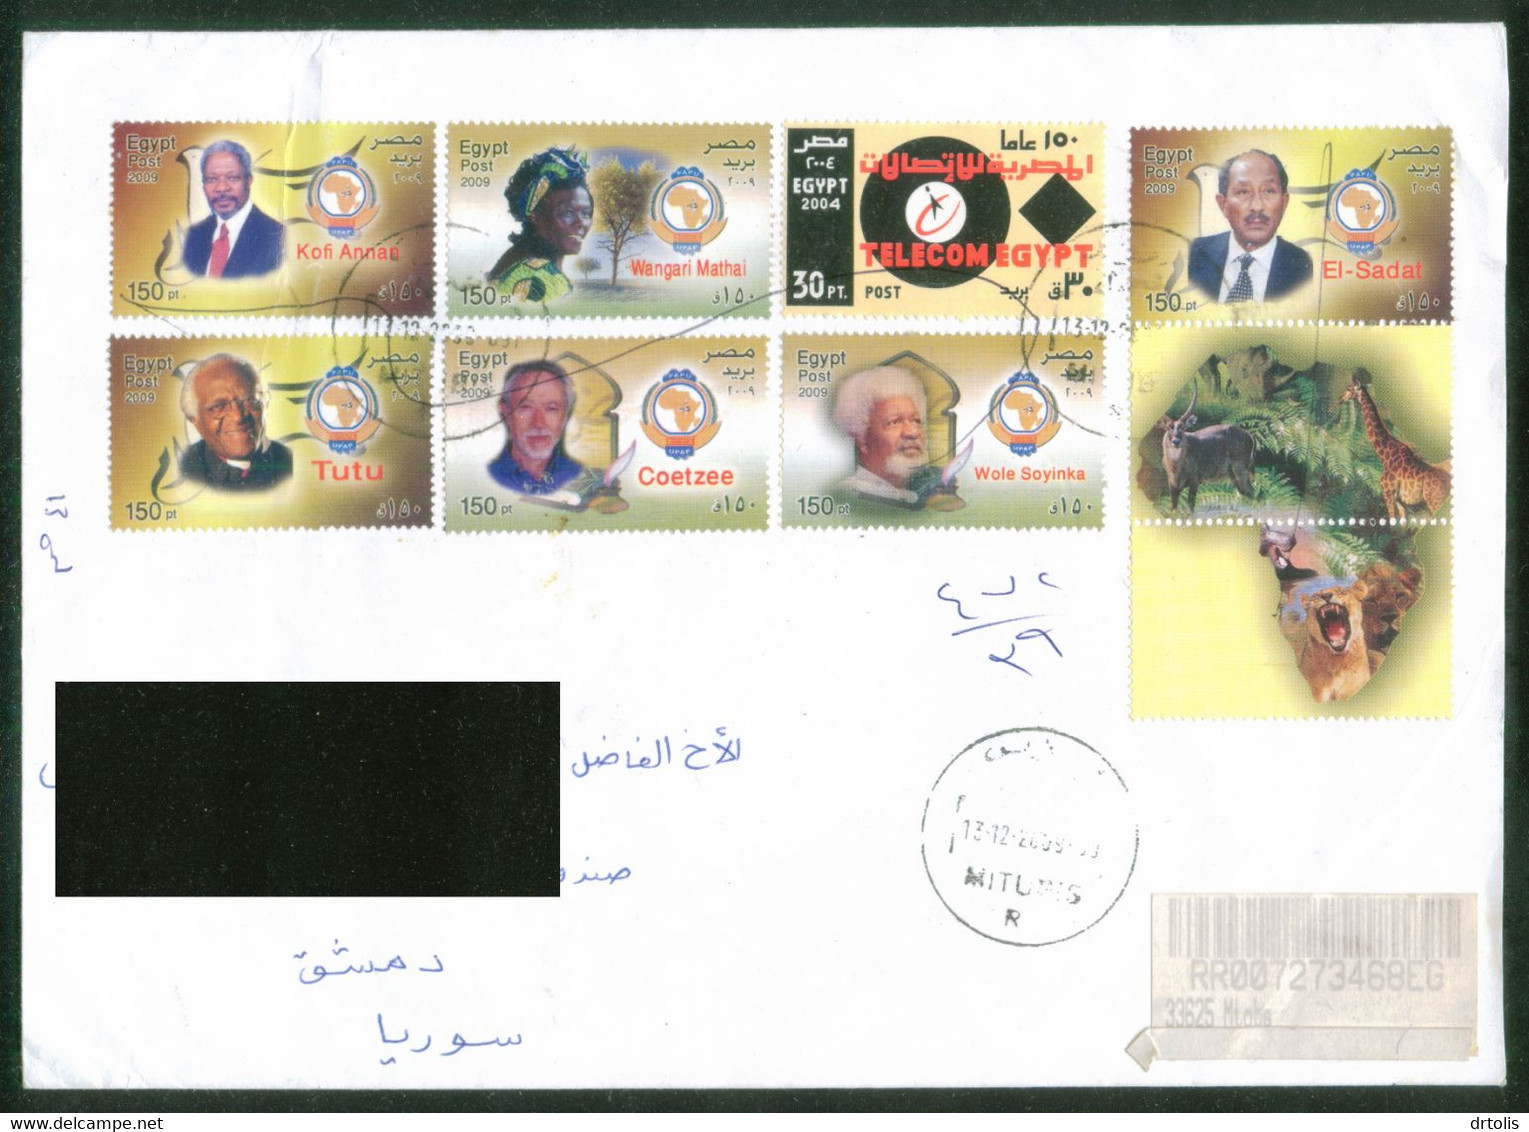 EGYPT / SYRIA / 2004 / THE WITHDRAWN TELECOM STAMP ON COVER TO SYRIA - Cartas & Documentos